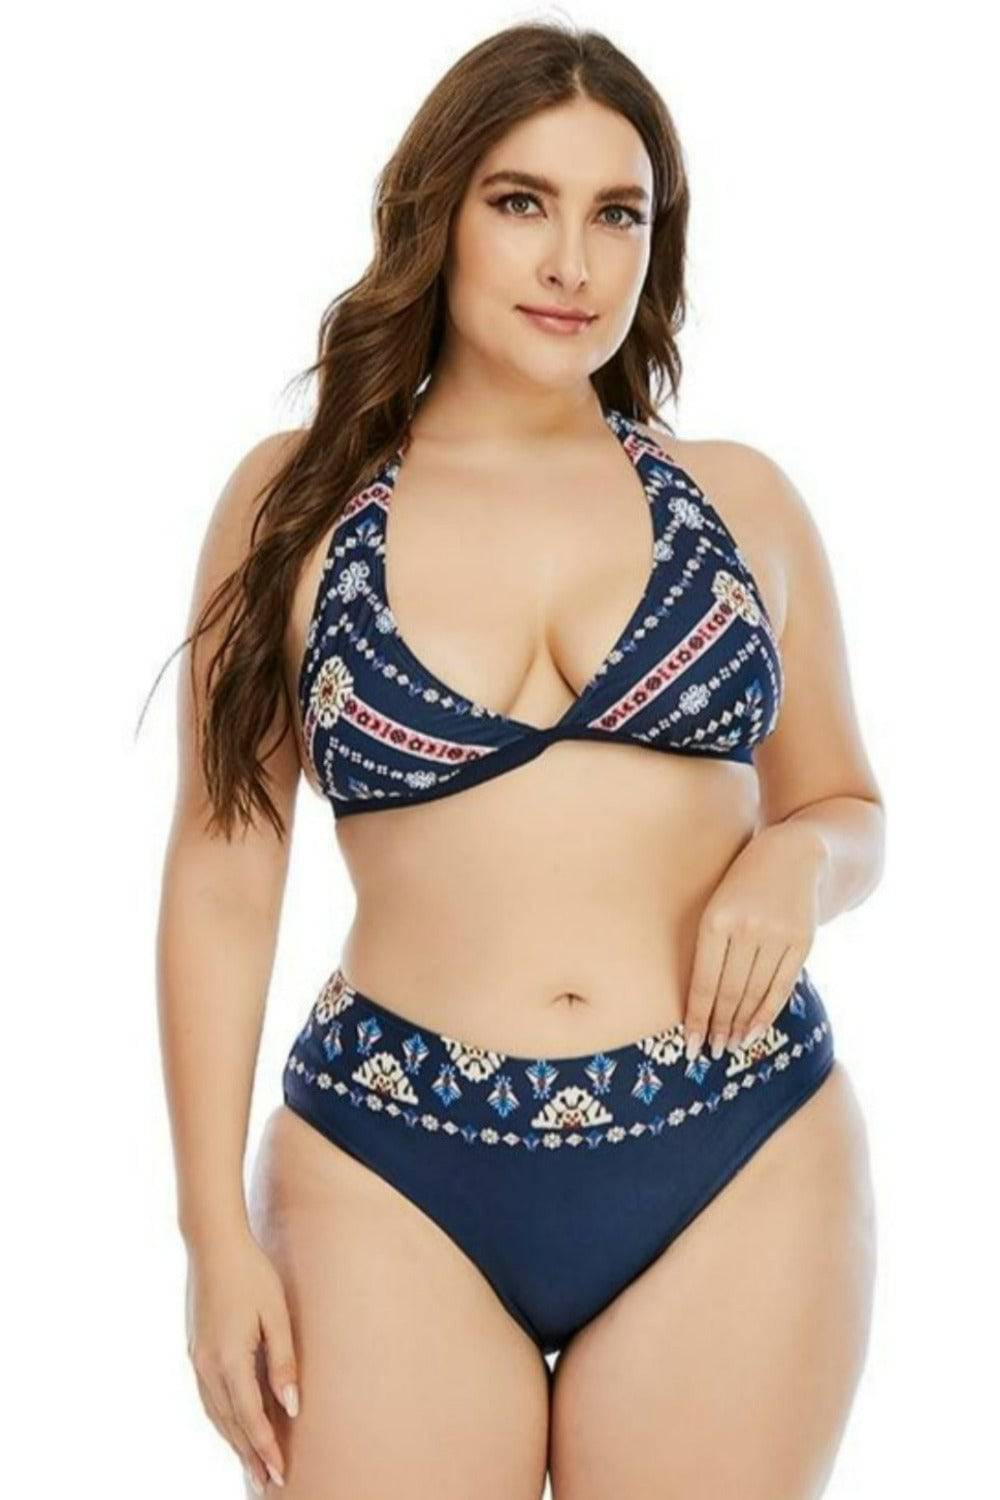 Tamara Blue Two-Piece Plus size Bikini Swimsuit - TGC Boutique - Plus Size Swimsuit